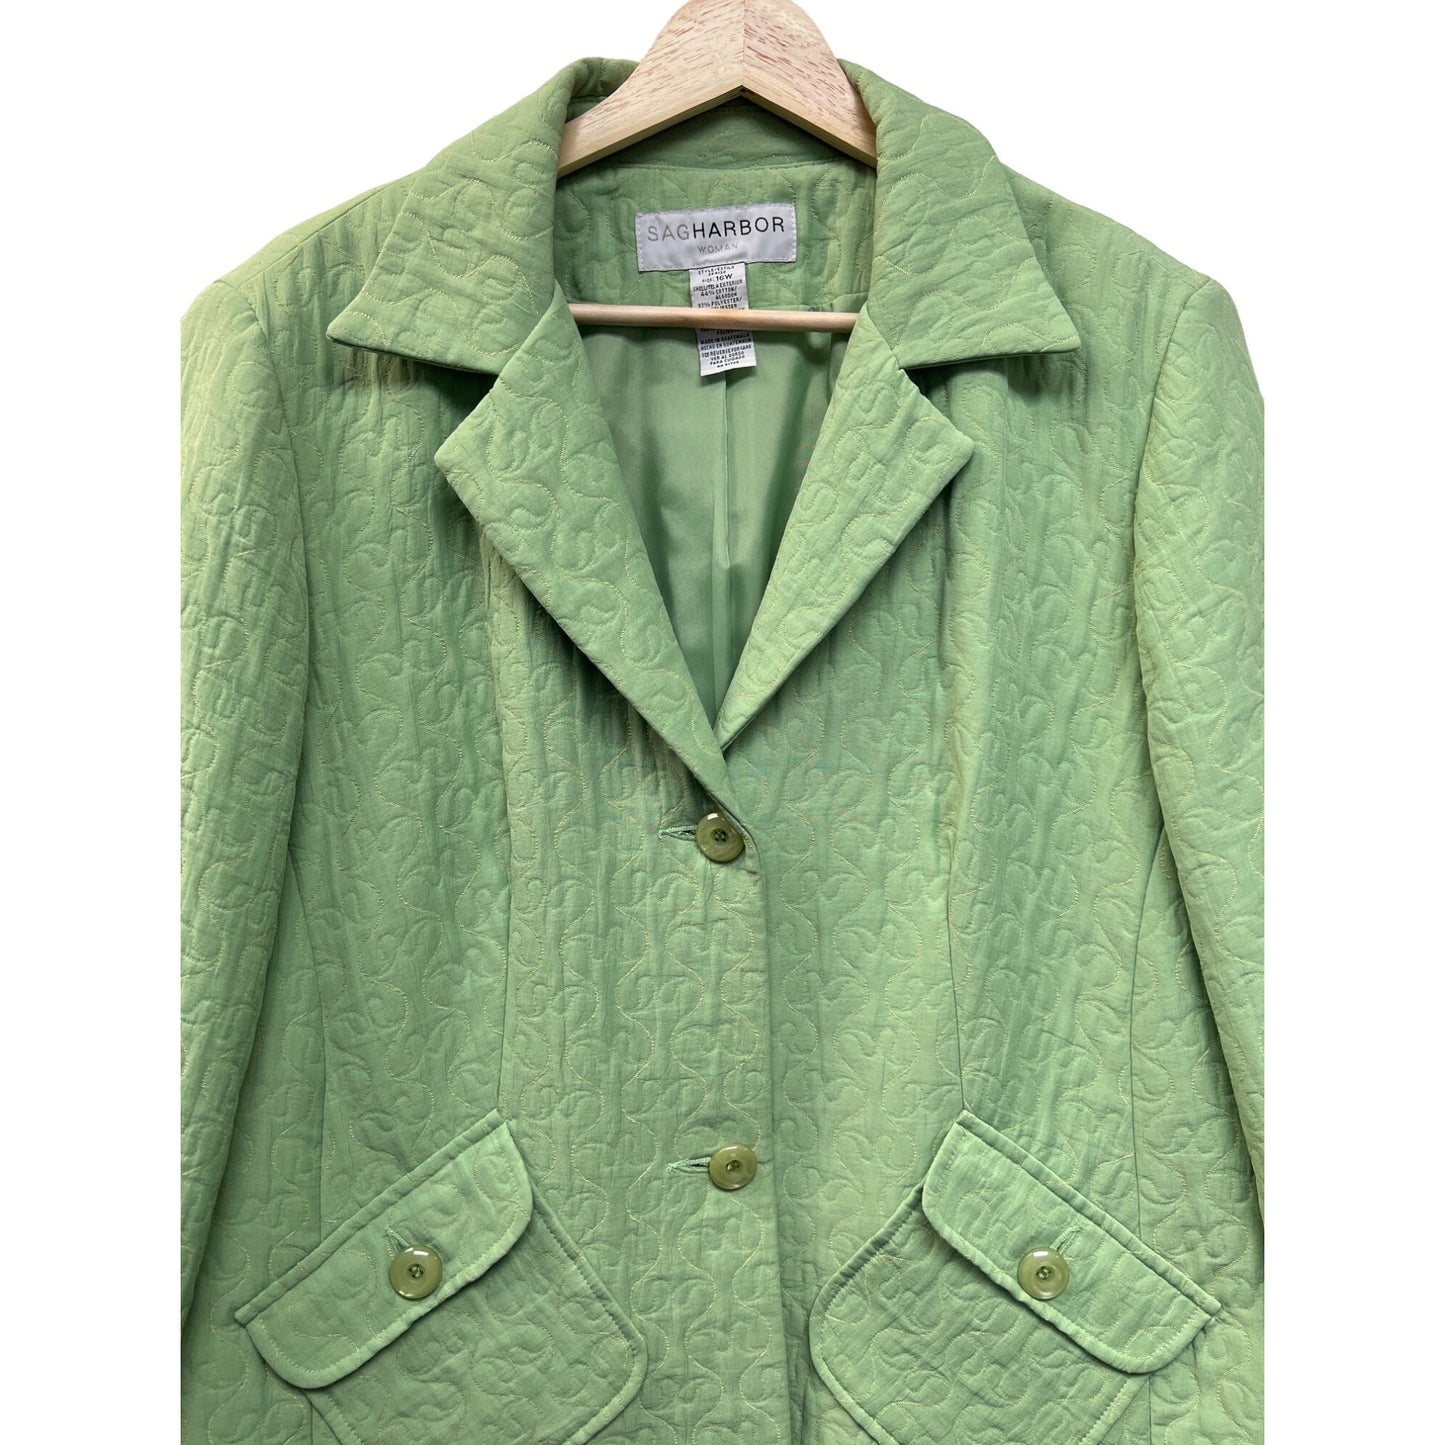 Sag Harbor Green Quilted Blazer Jacket